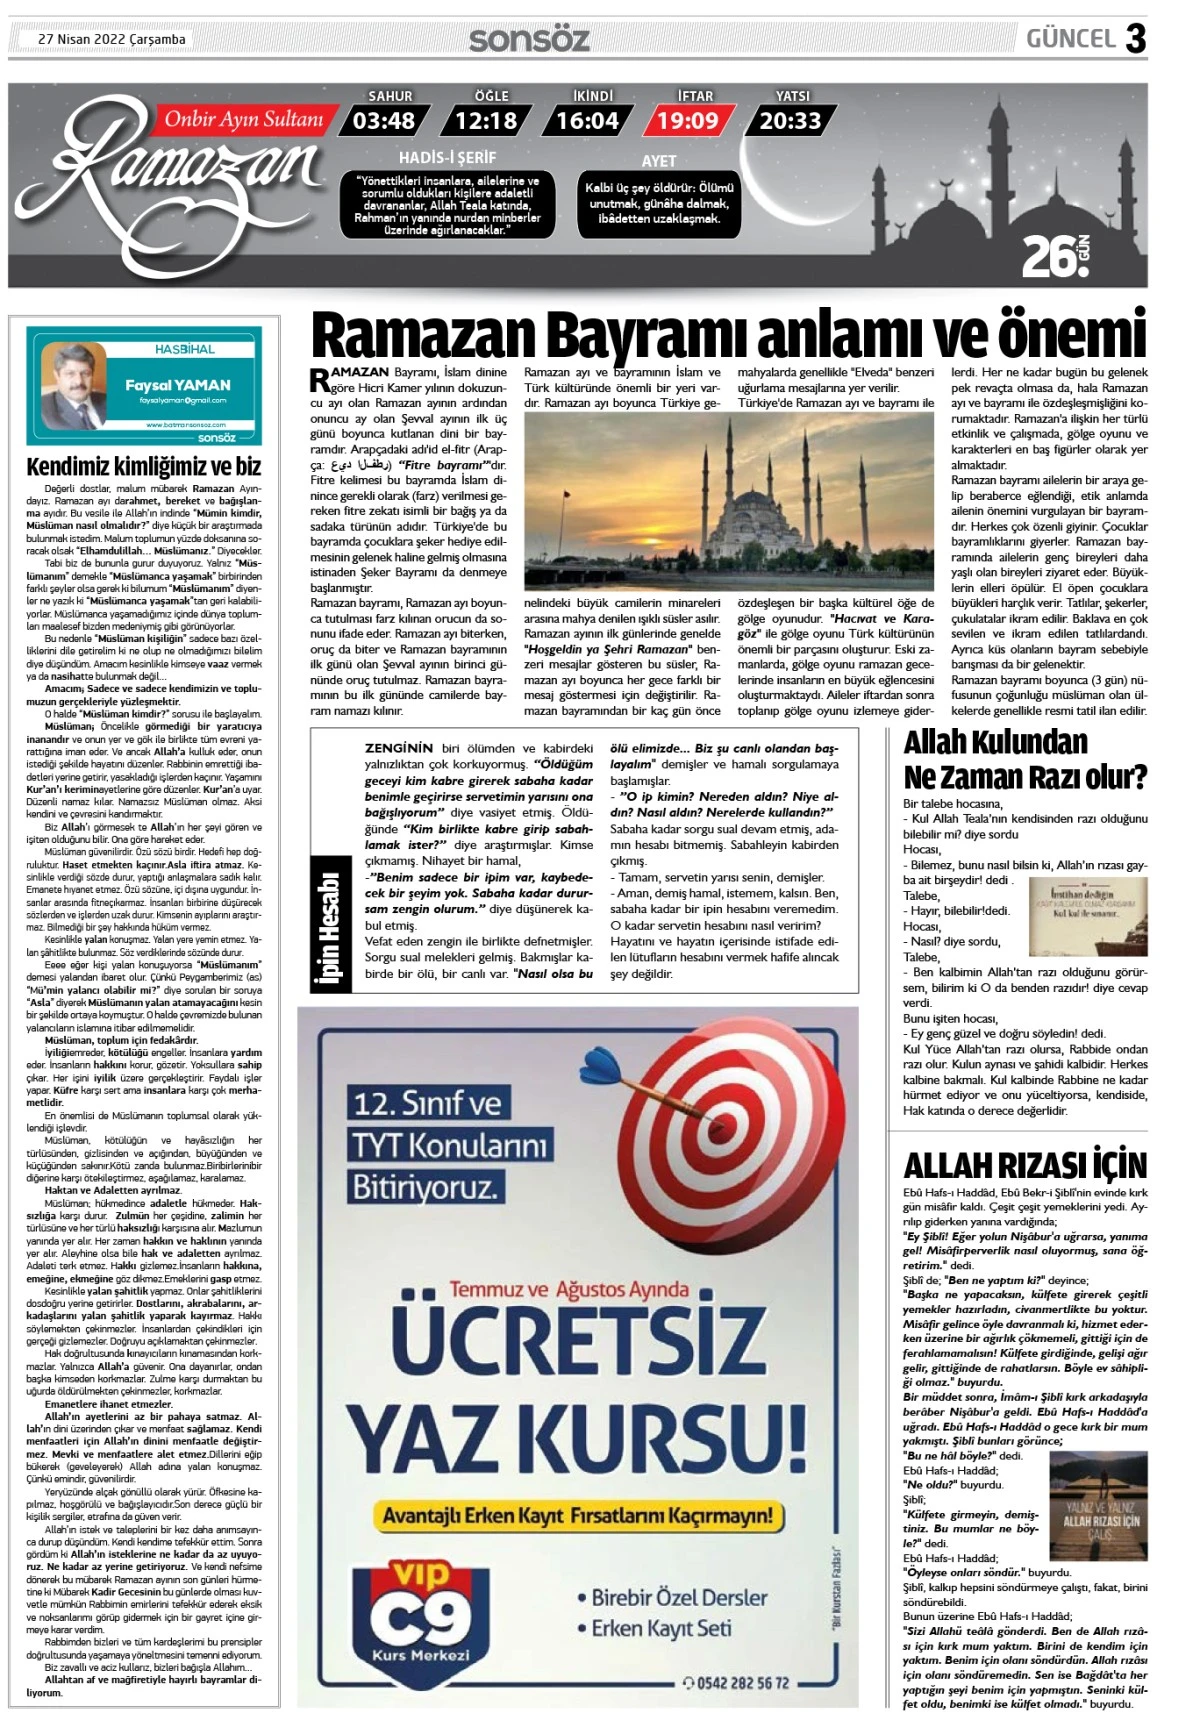 27 Nisan 2022 E-gazete